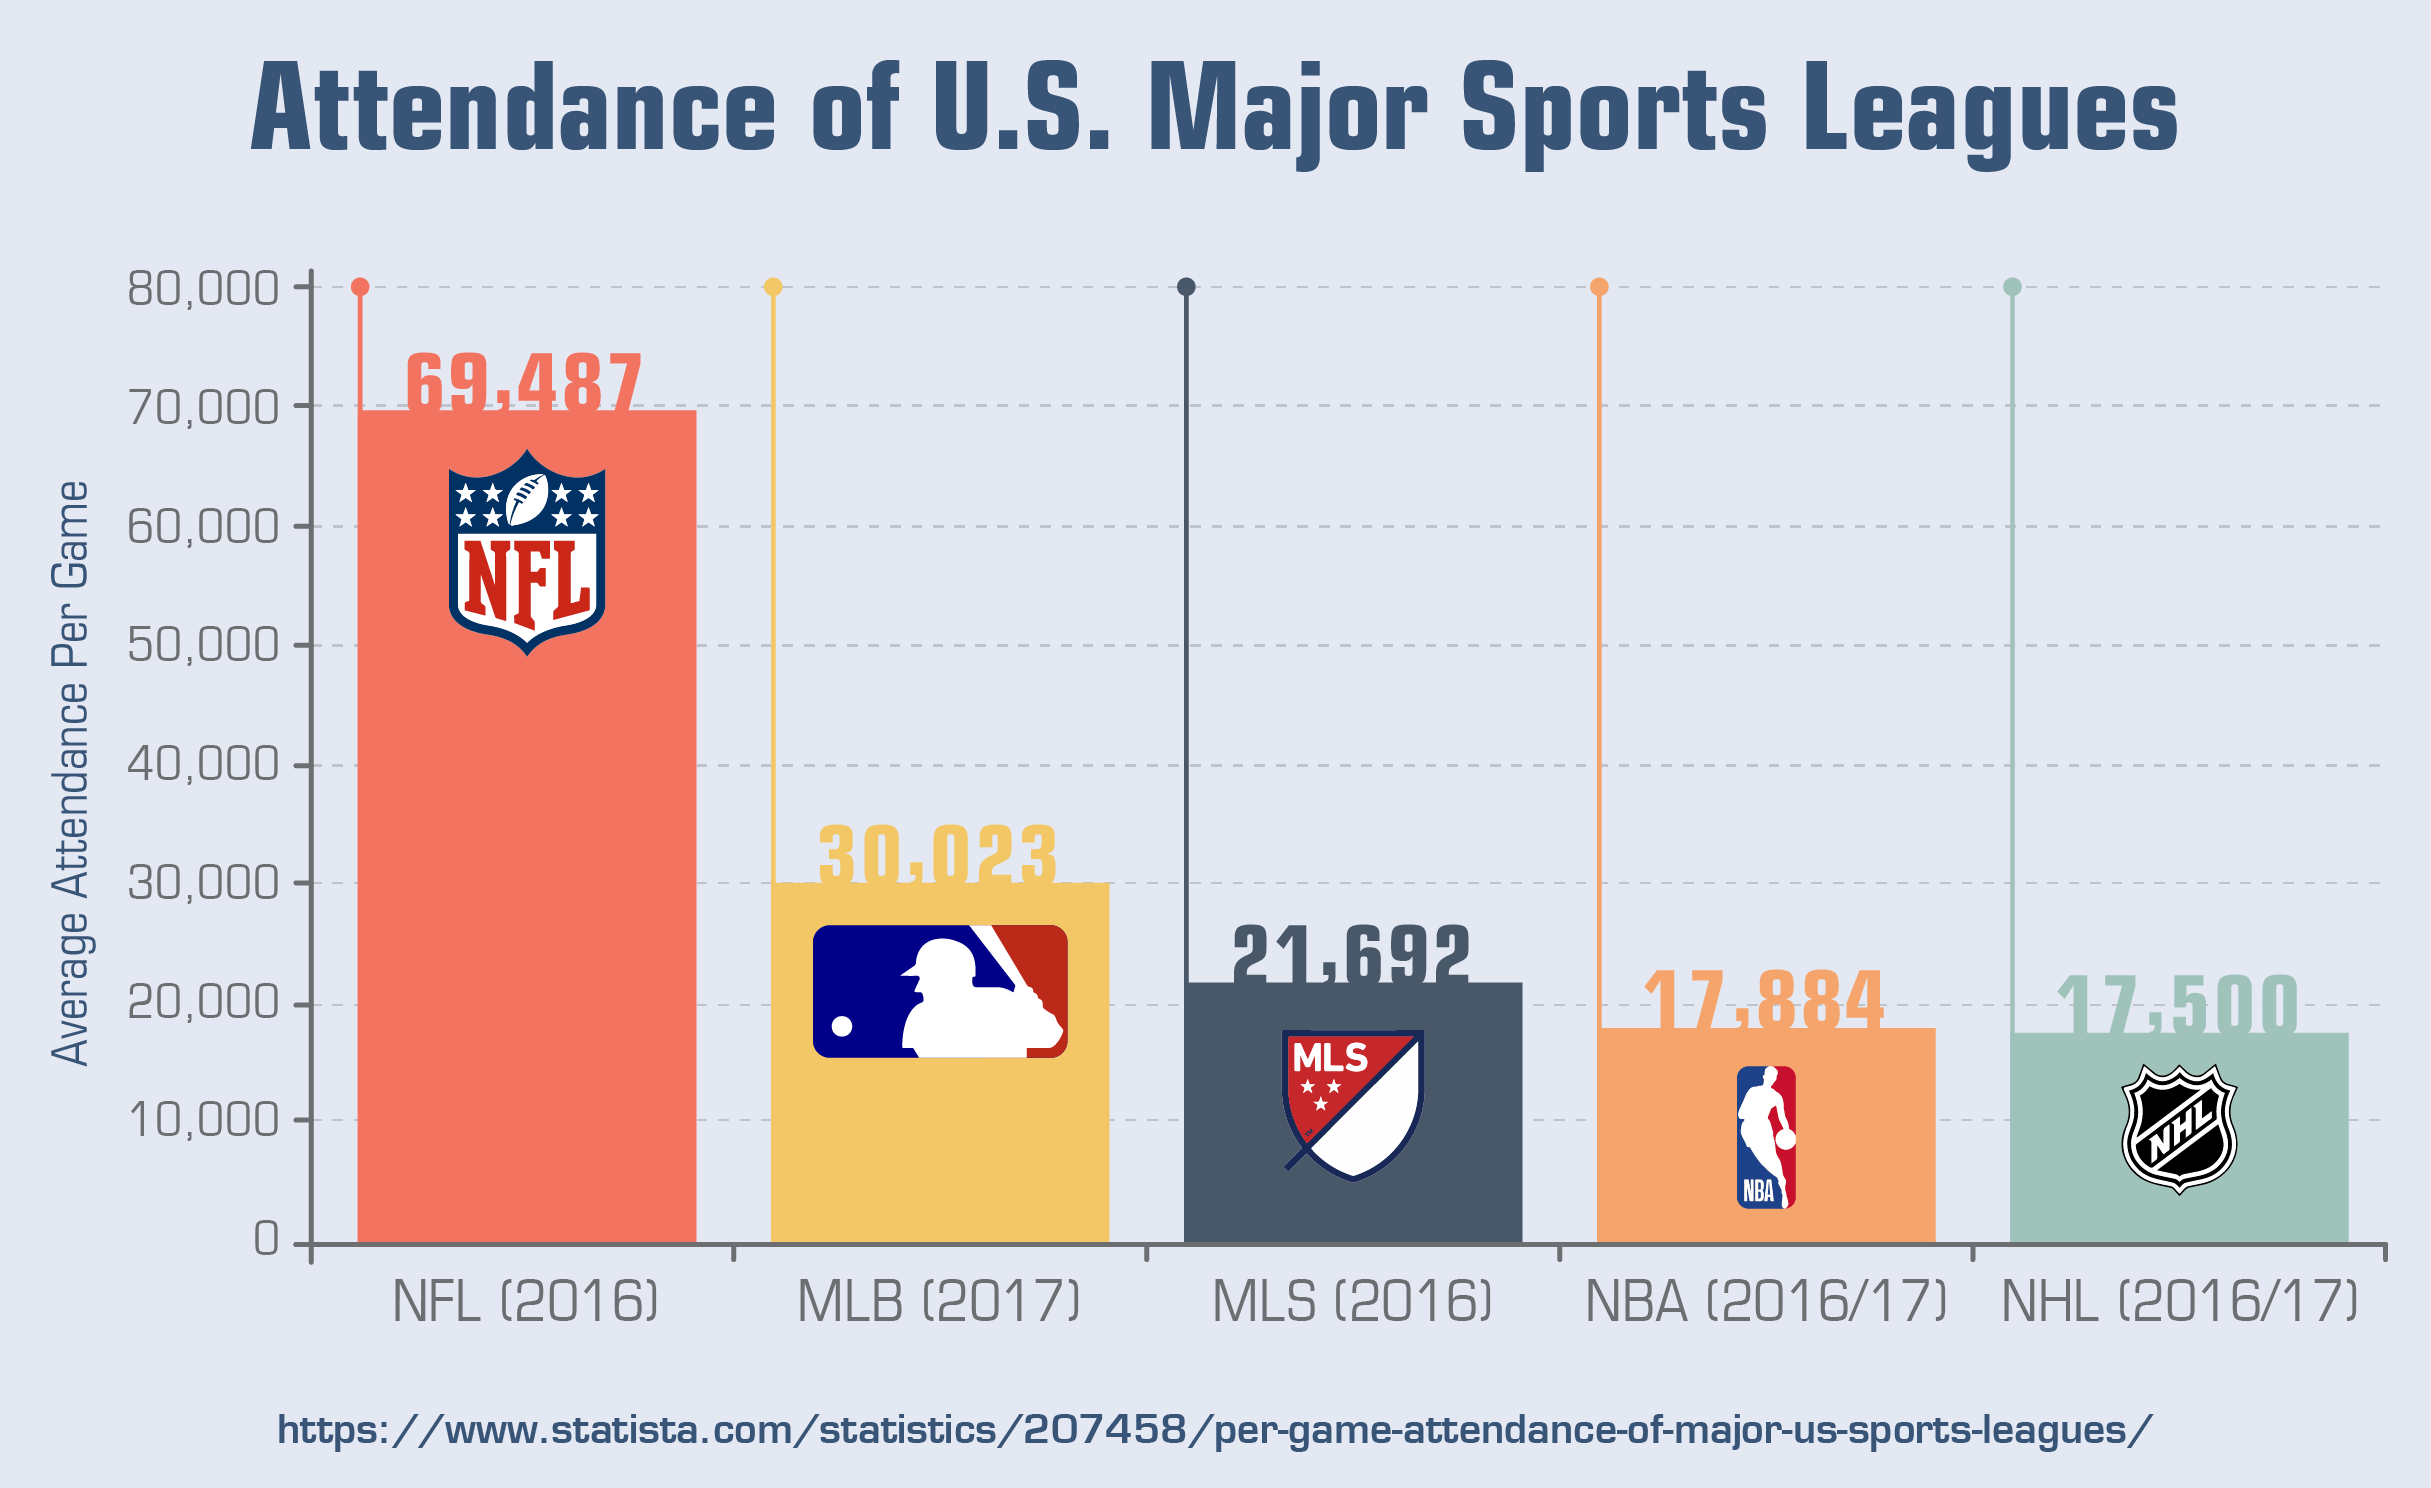 Attendance of U.S. Major Sports Leagues (2016/17)